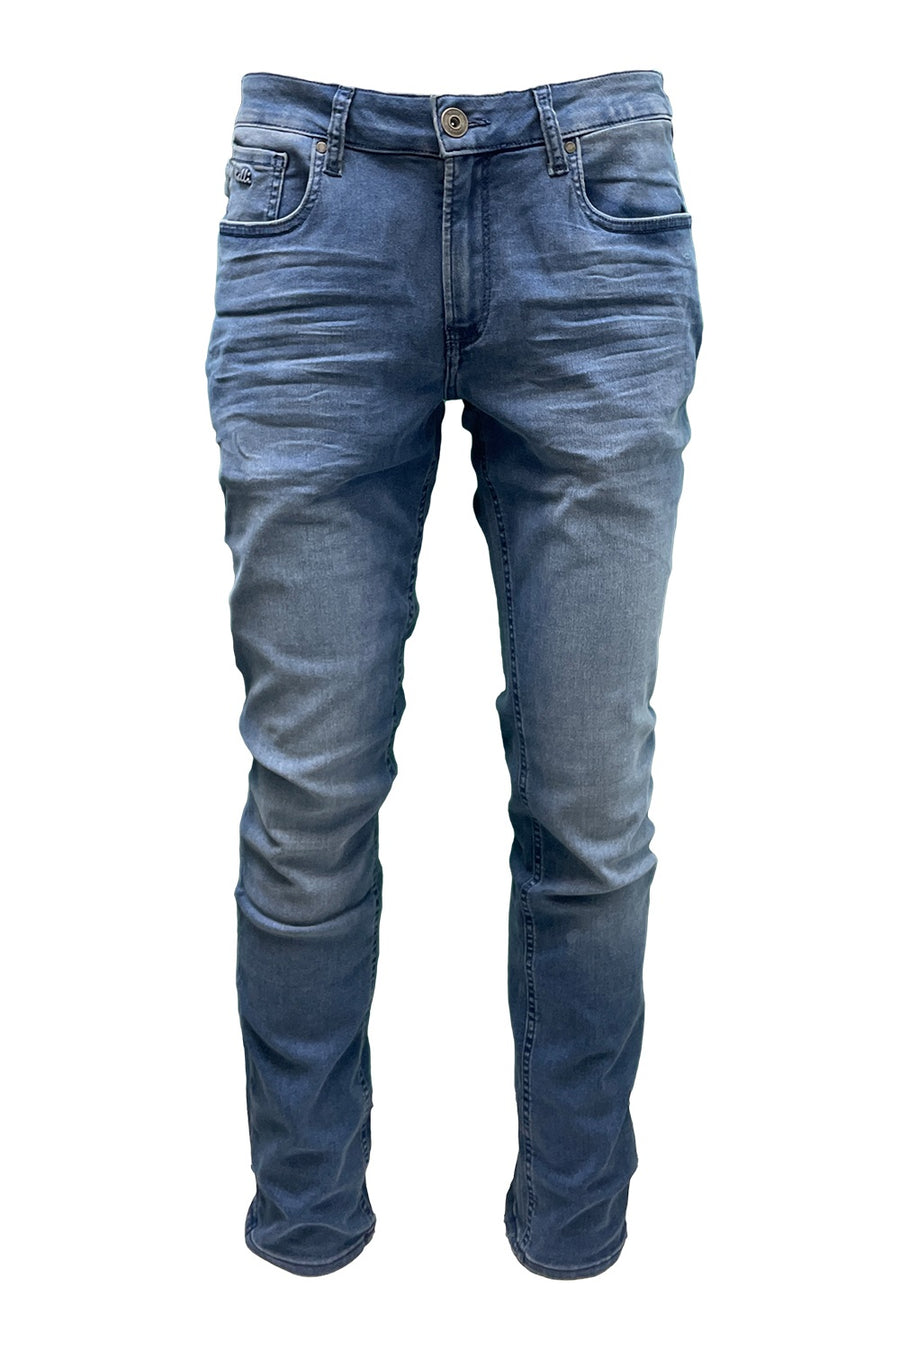 Bouncee Sottle Slim-Fit Jeans*